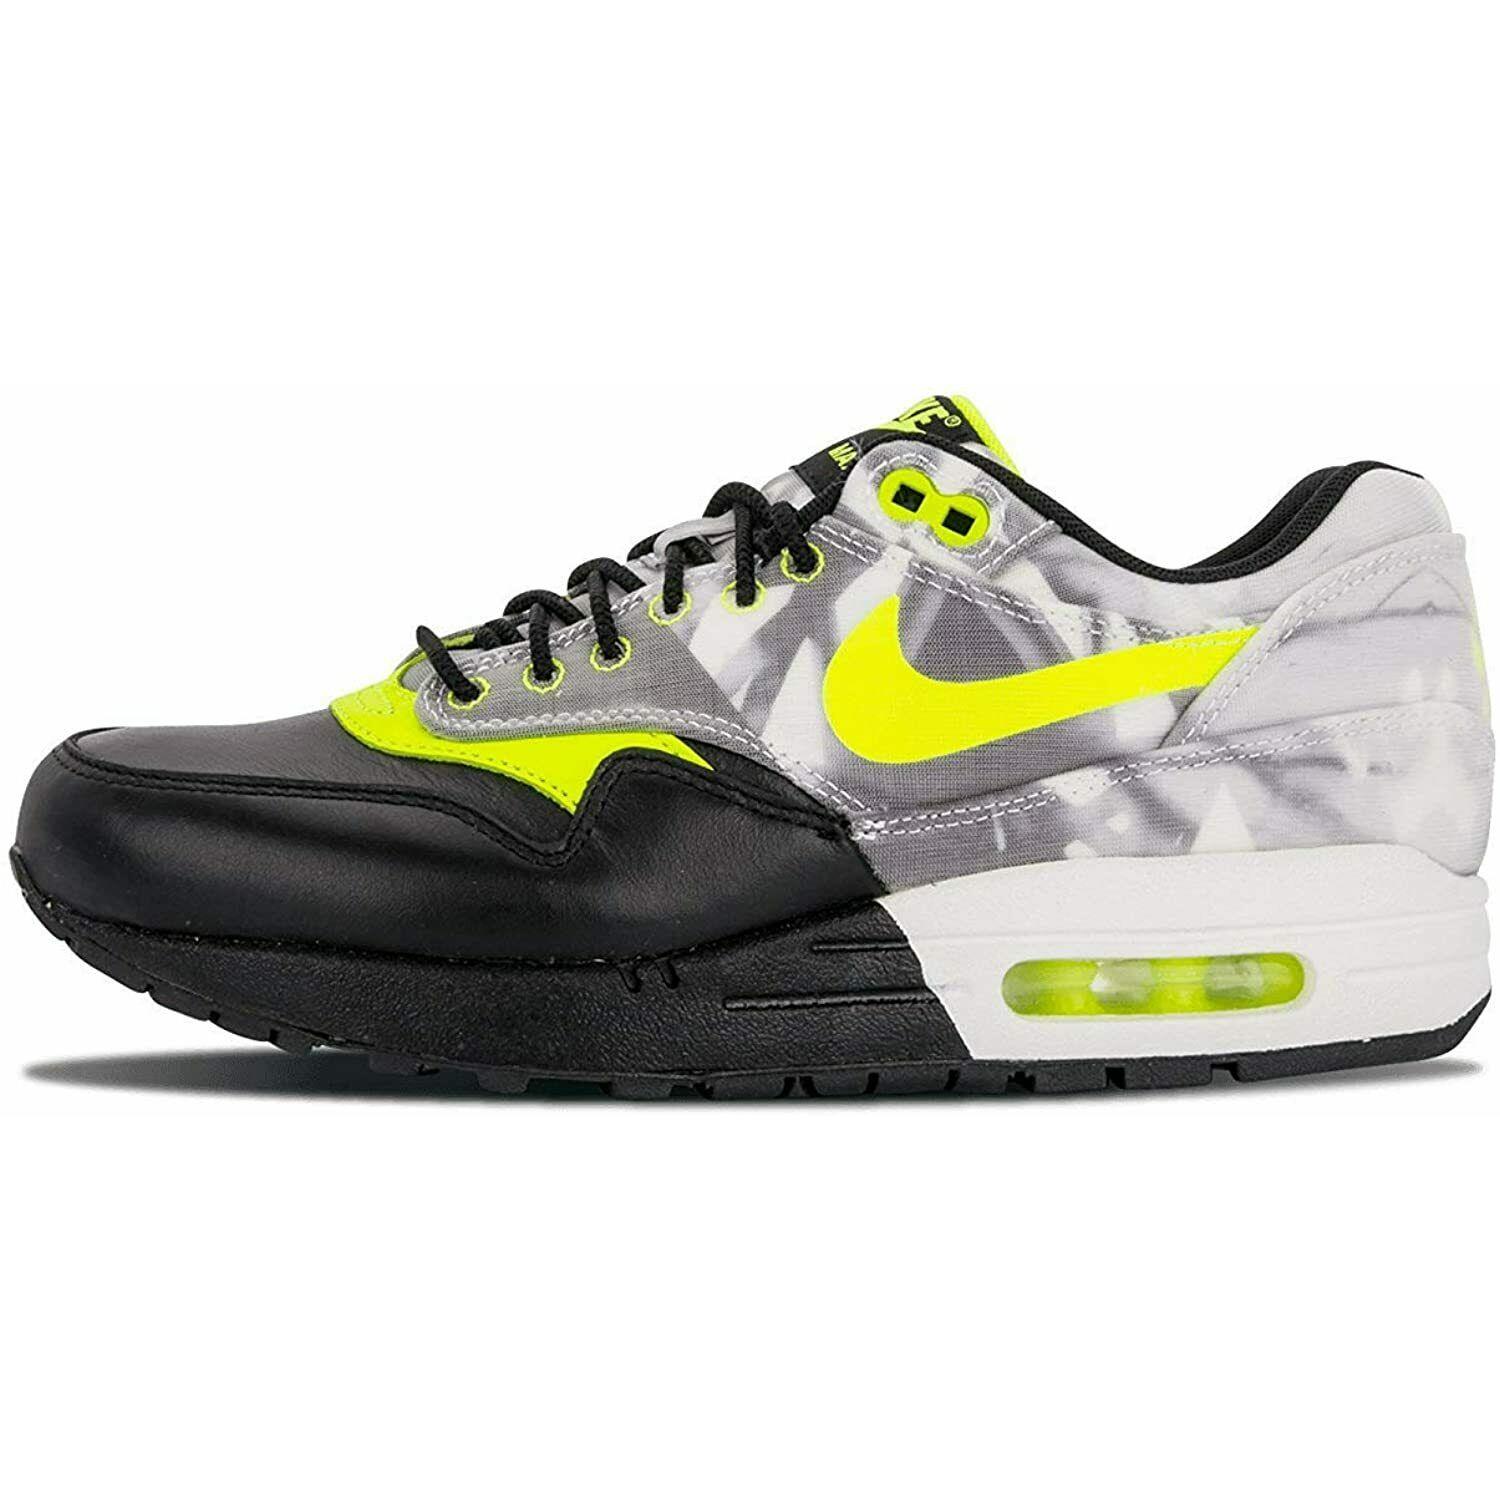 Nike Air Max 1 FV QS Black/grey/white Running Shoes 677340 001 Women Size 8